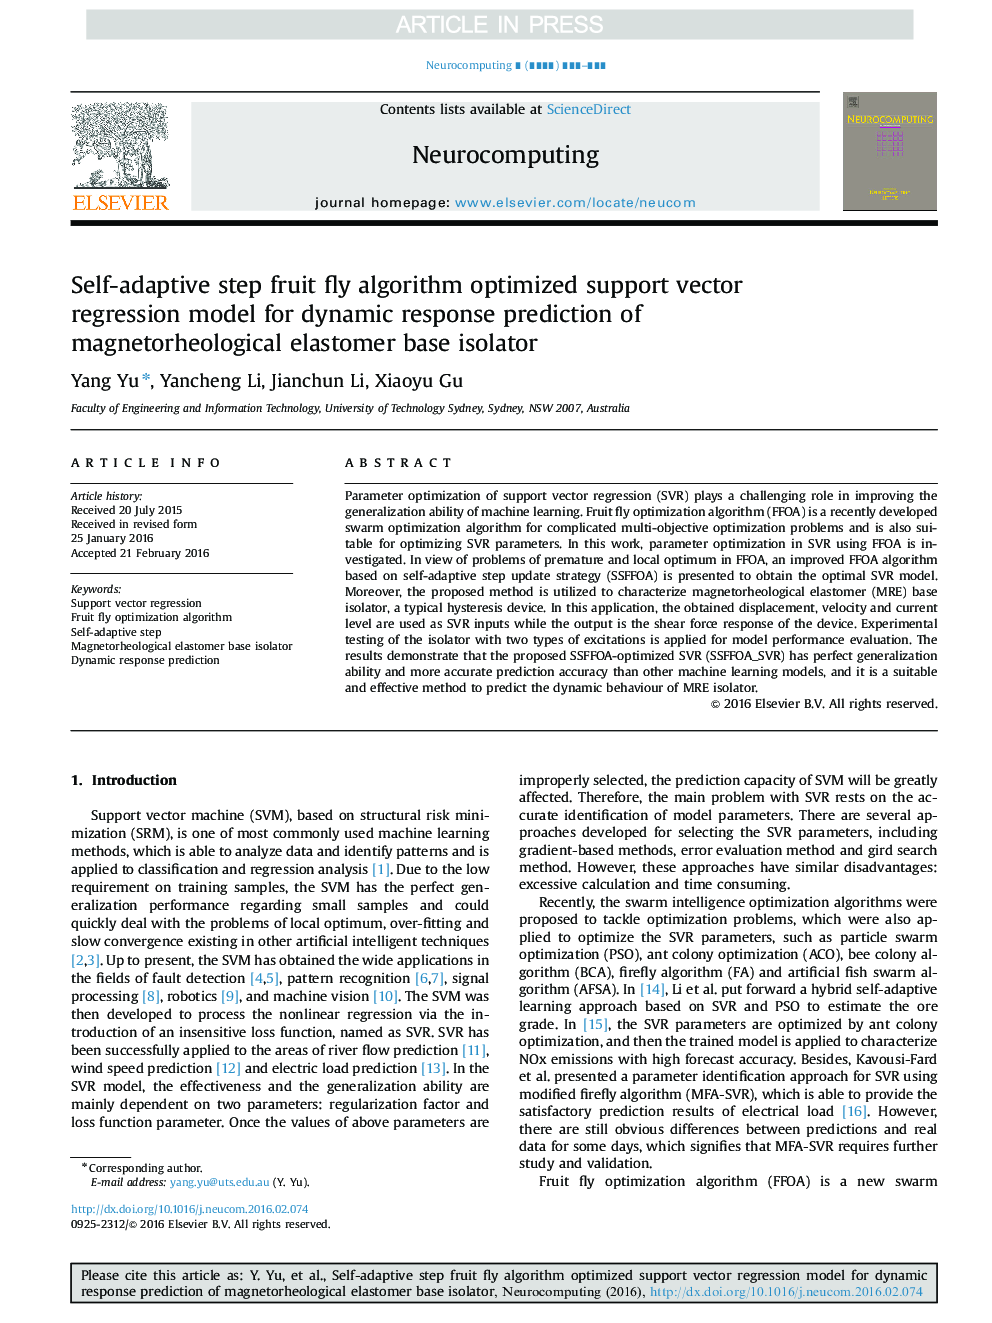 Self-adaptive step fruit fly algorithm optimized support vector regression model for dynamic response prediction of magnetorheological elastomer base isolator